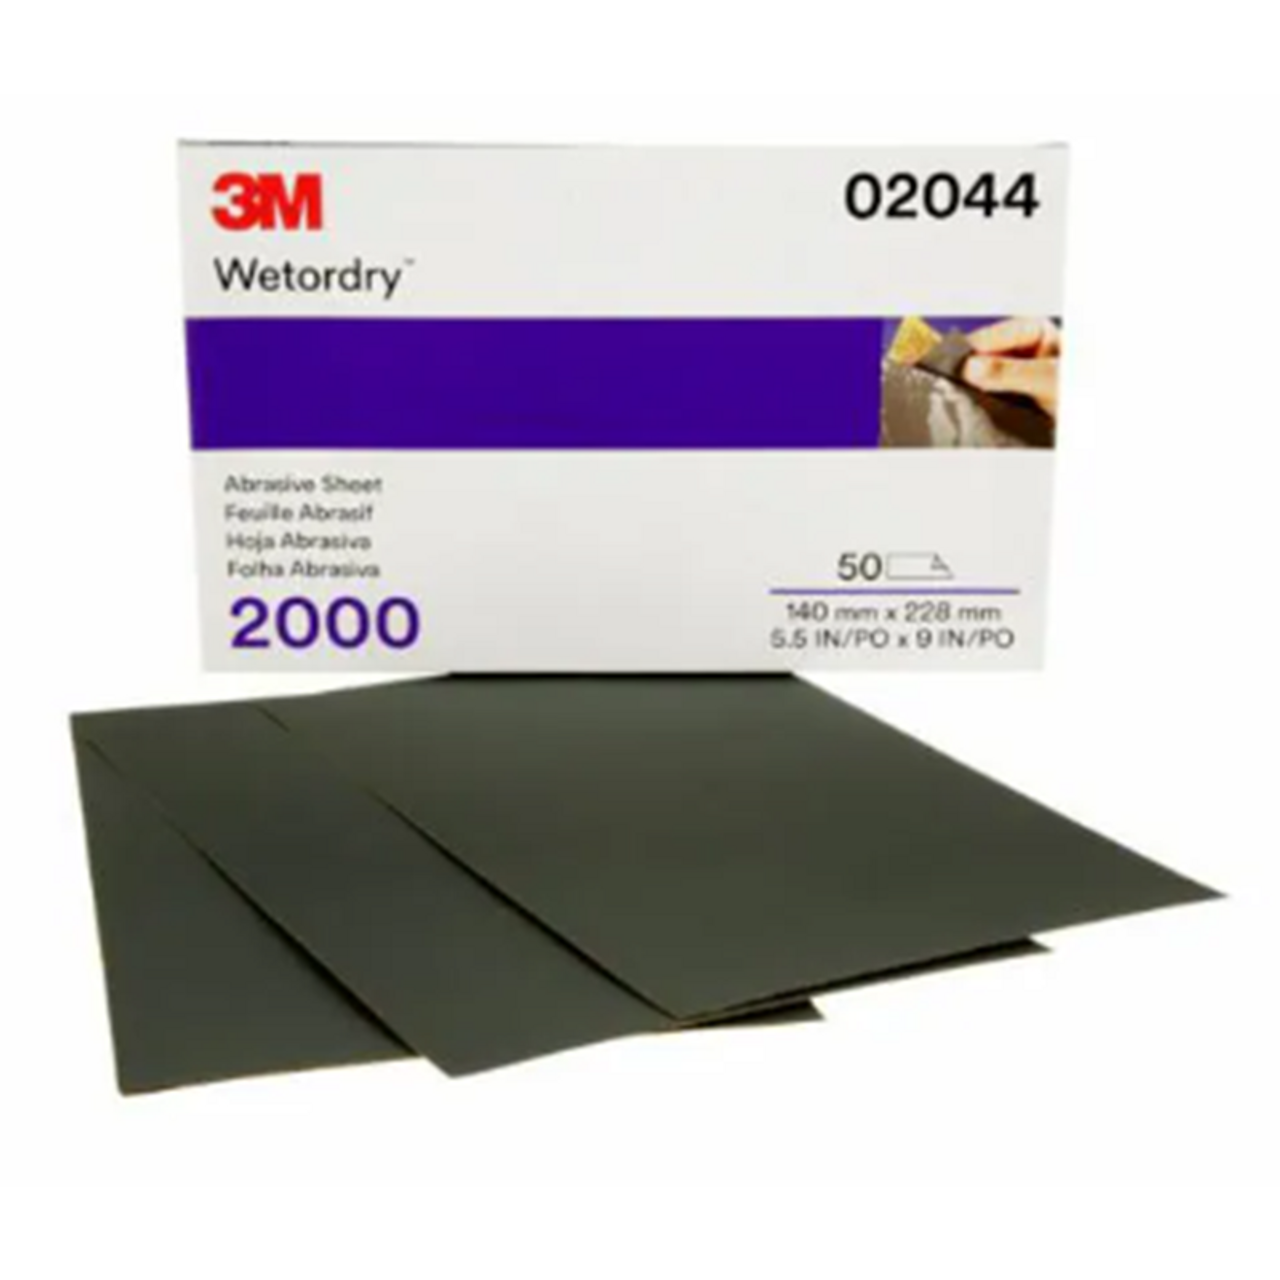 3M™ Wetordry™ Abrasive Sheet 2000 Grit  5 1/2 x 9 in 50 sheets per carton